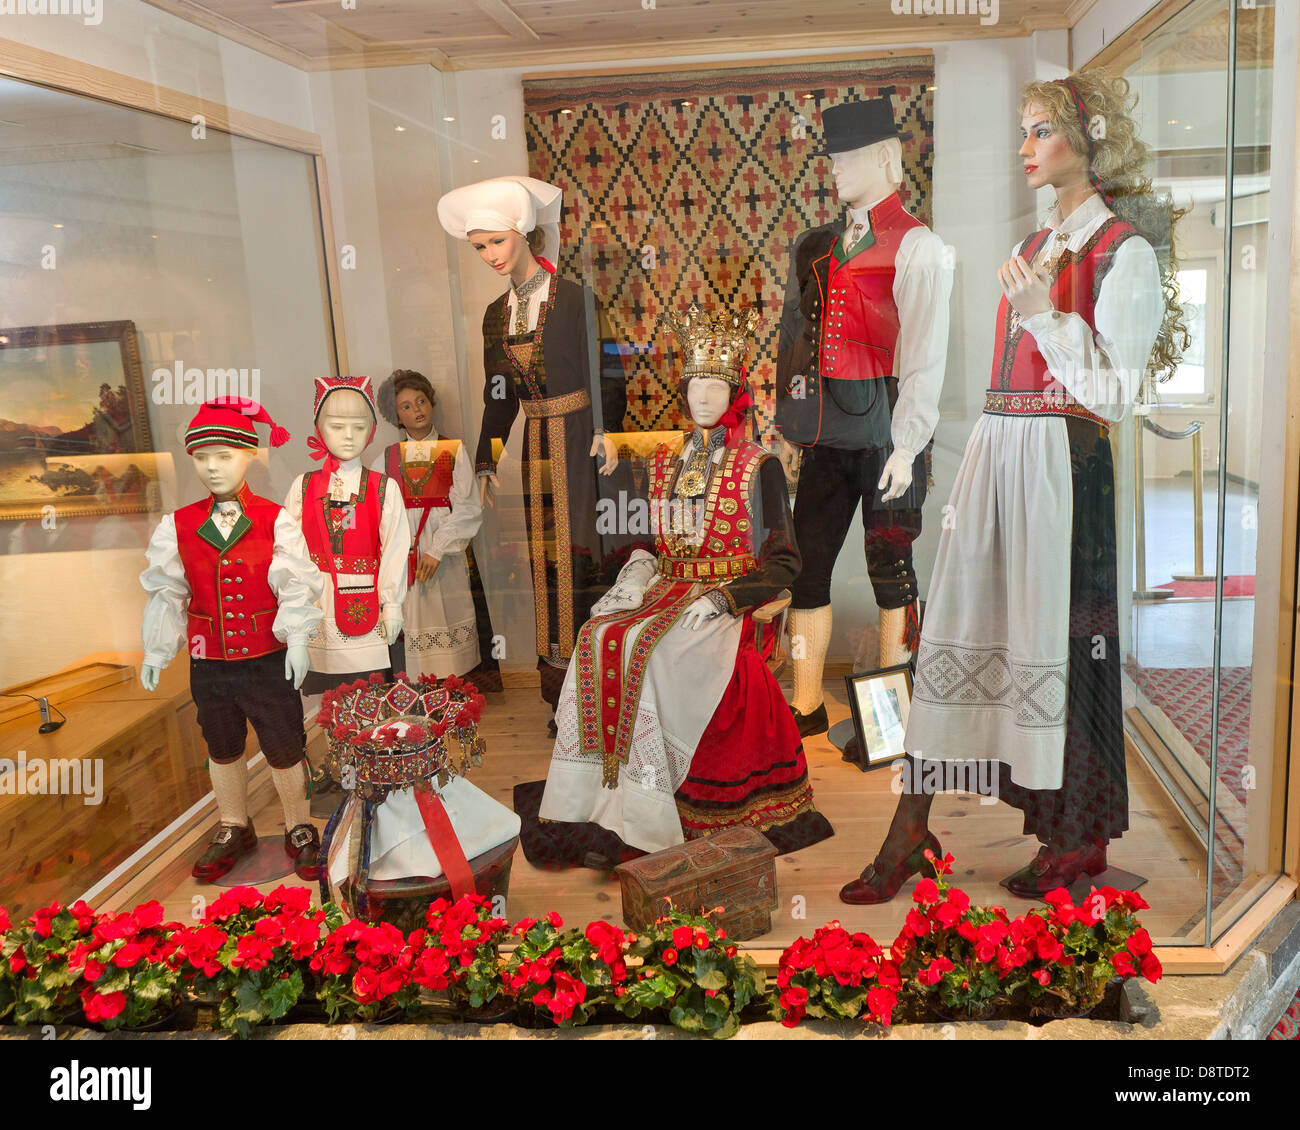 Costumes traditionnels norvégiens dans l'hôtel Ullensvang, Lofthus, Norvège Banque D'Images